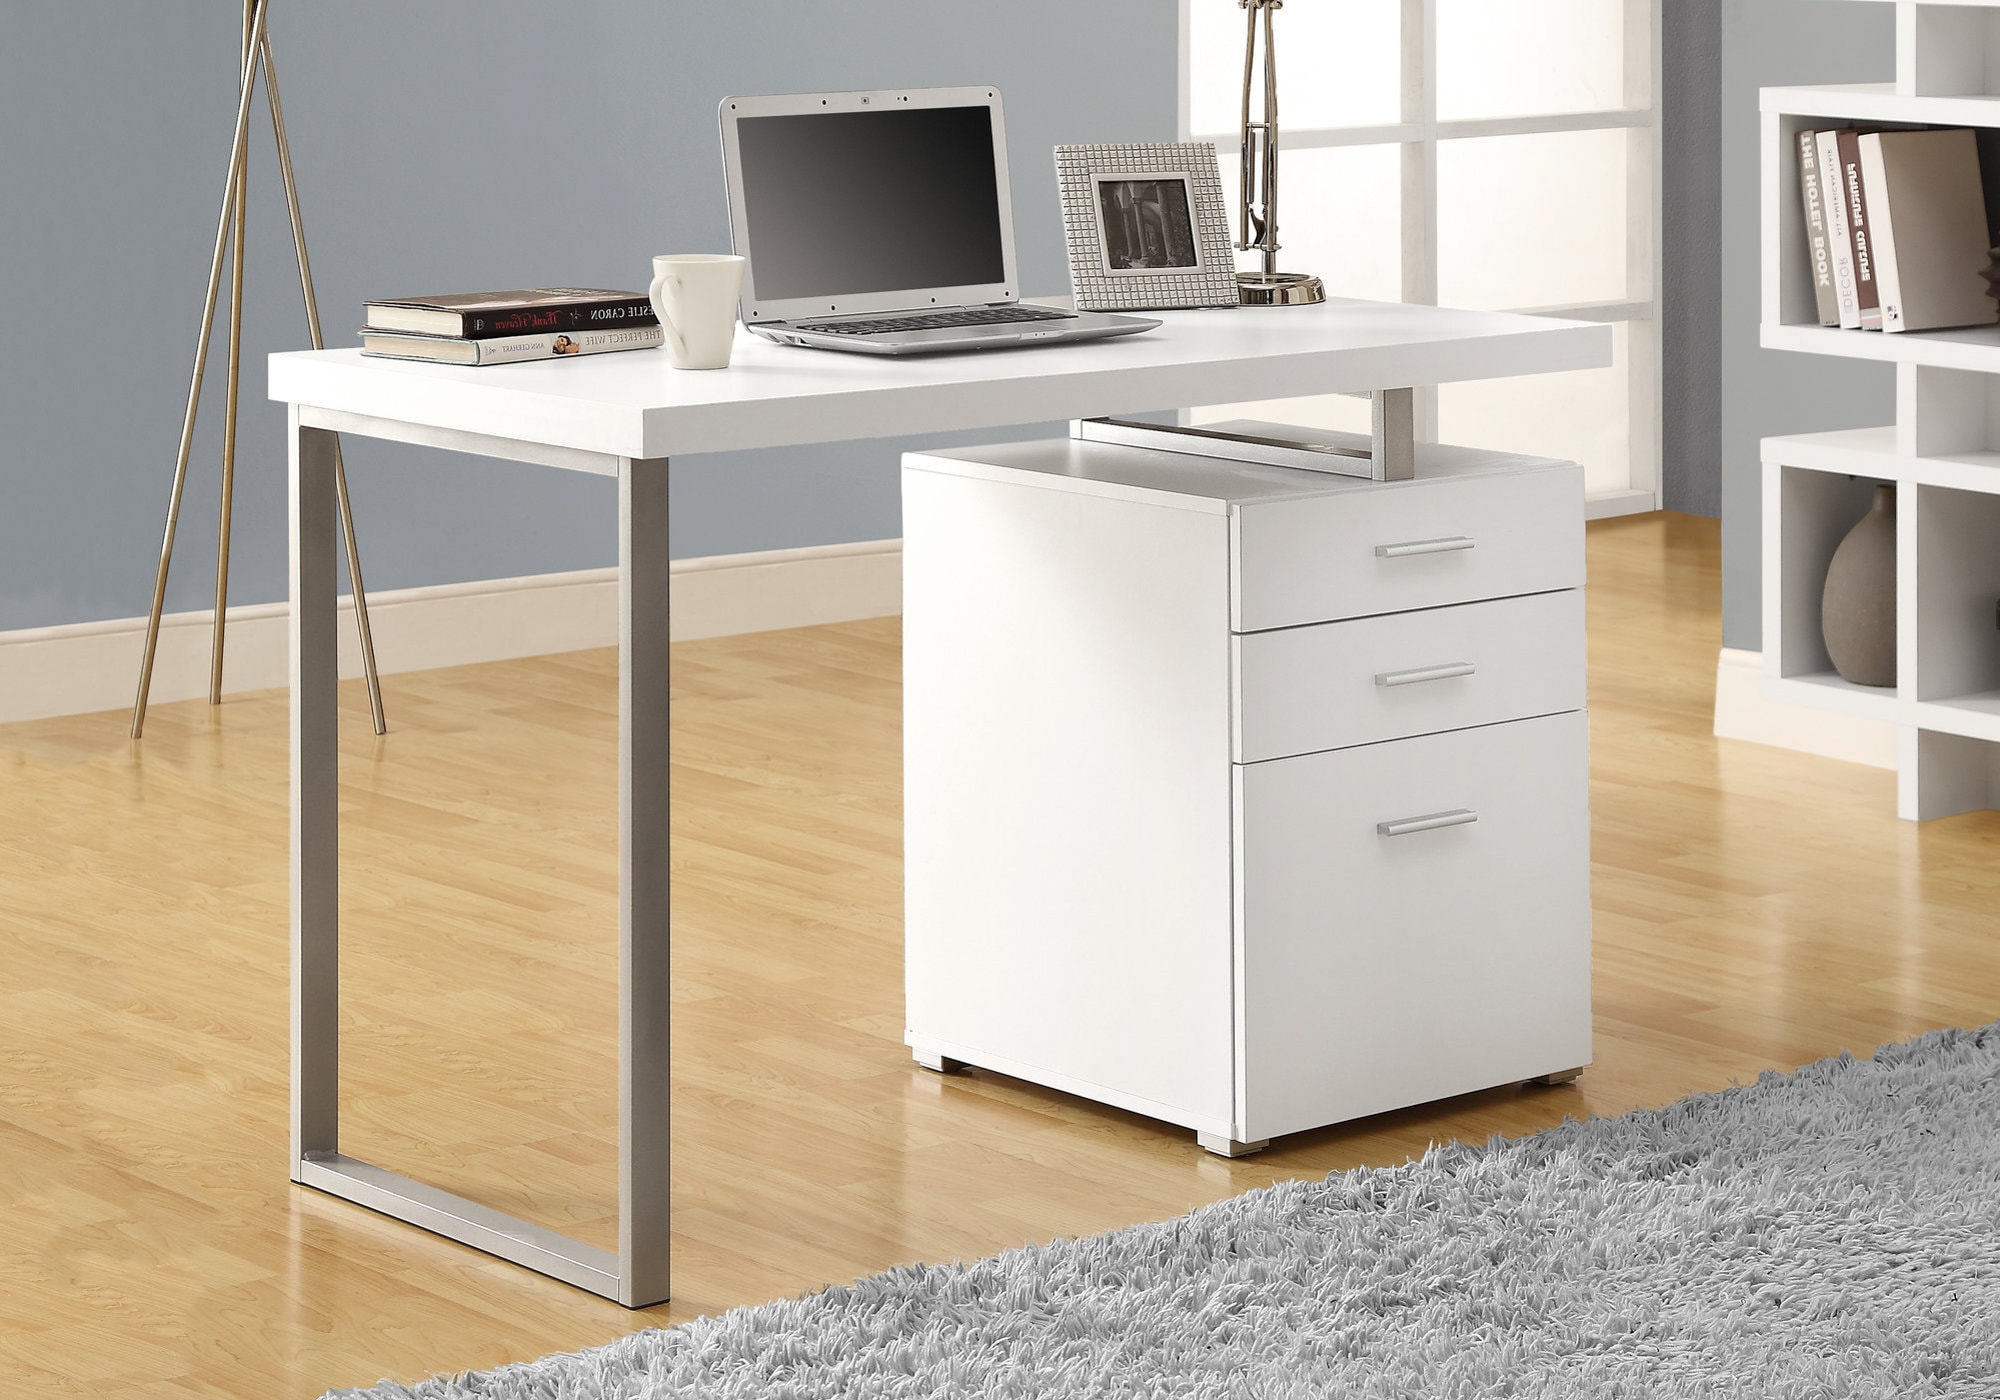 Monarch Specialties Computer Desk, White/Silver